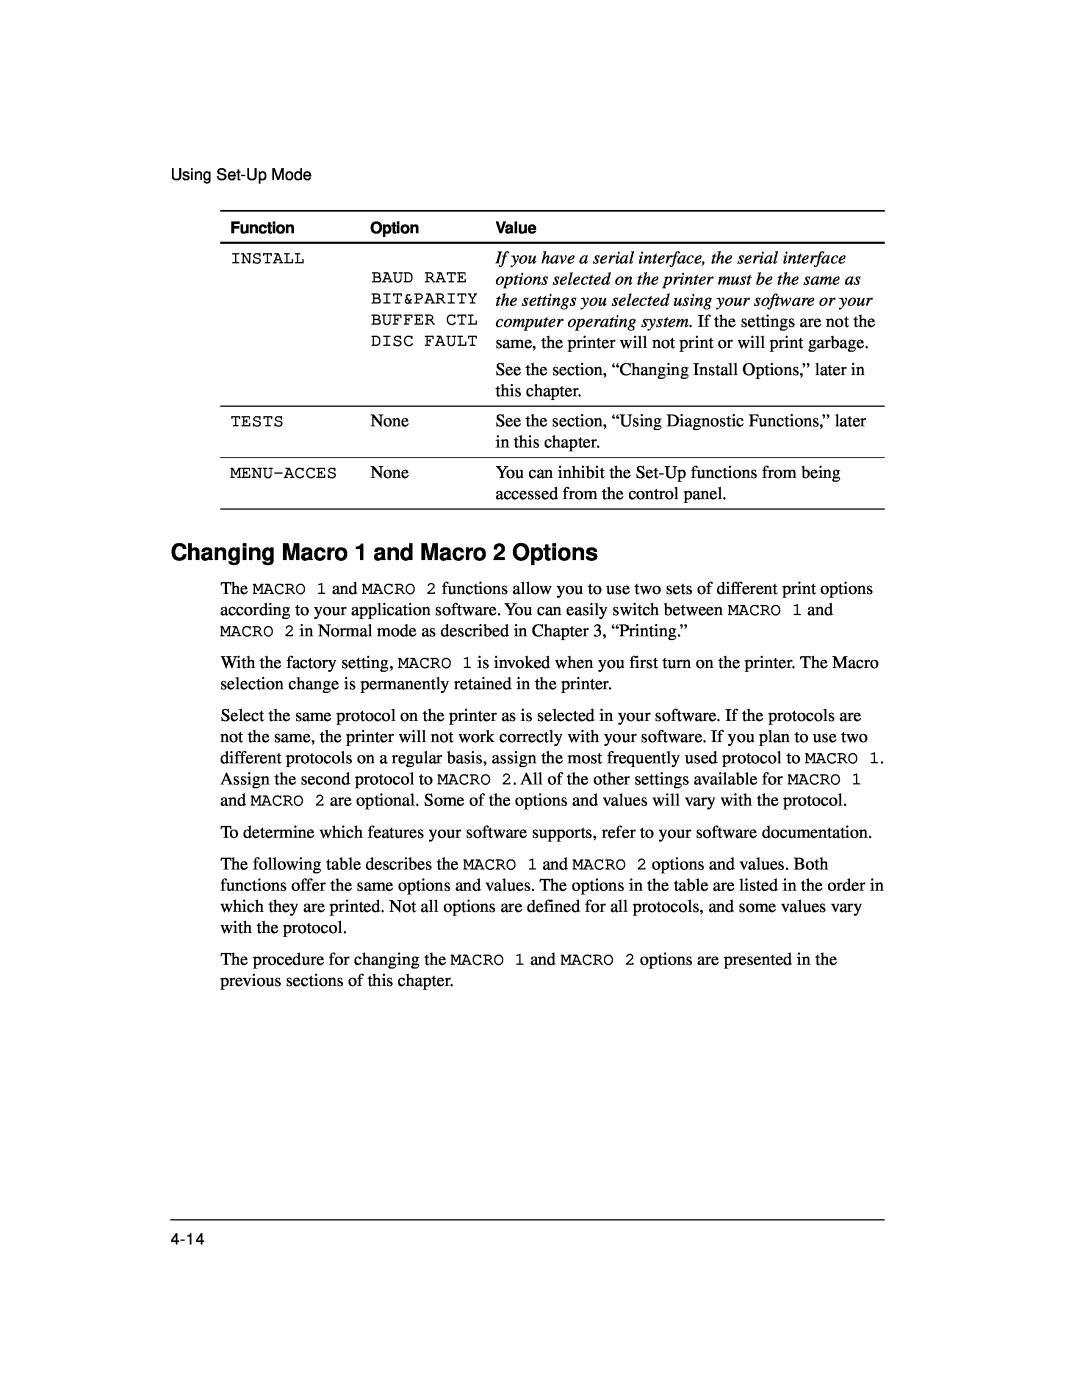 Genicom LA36 manual Changing Macro 1 and Macro 2 Options, FunctionOptionValue 